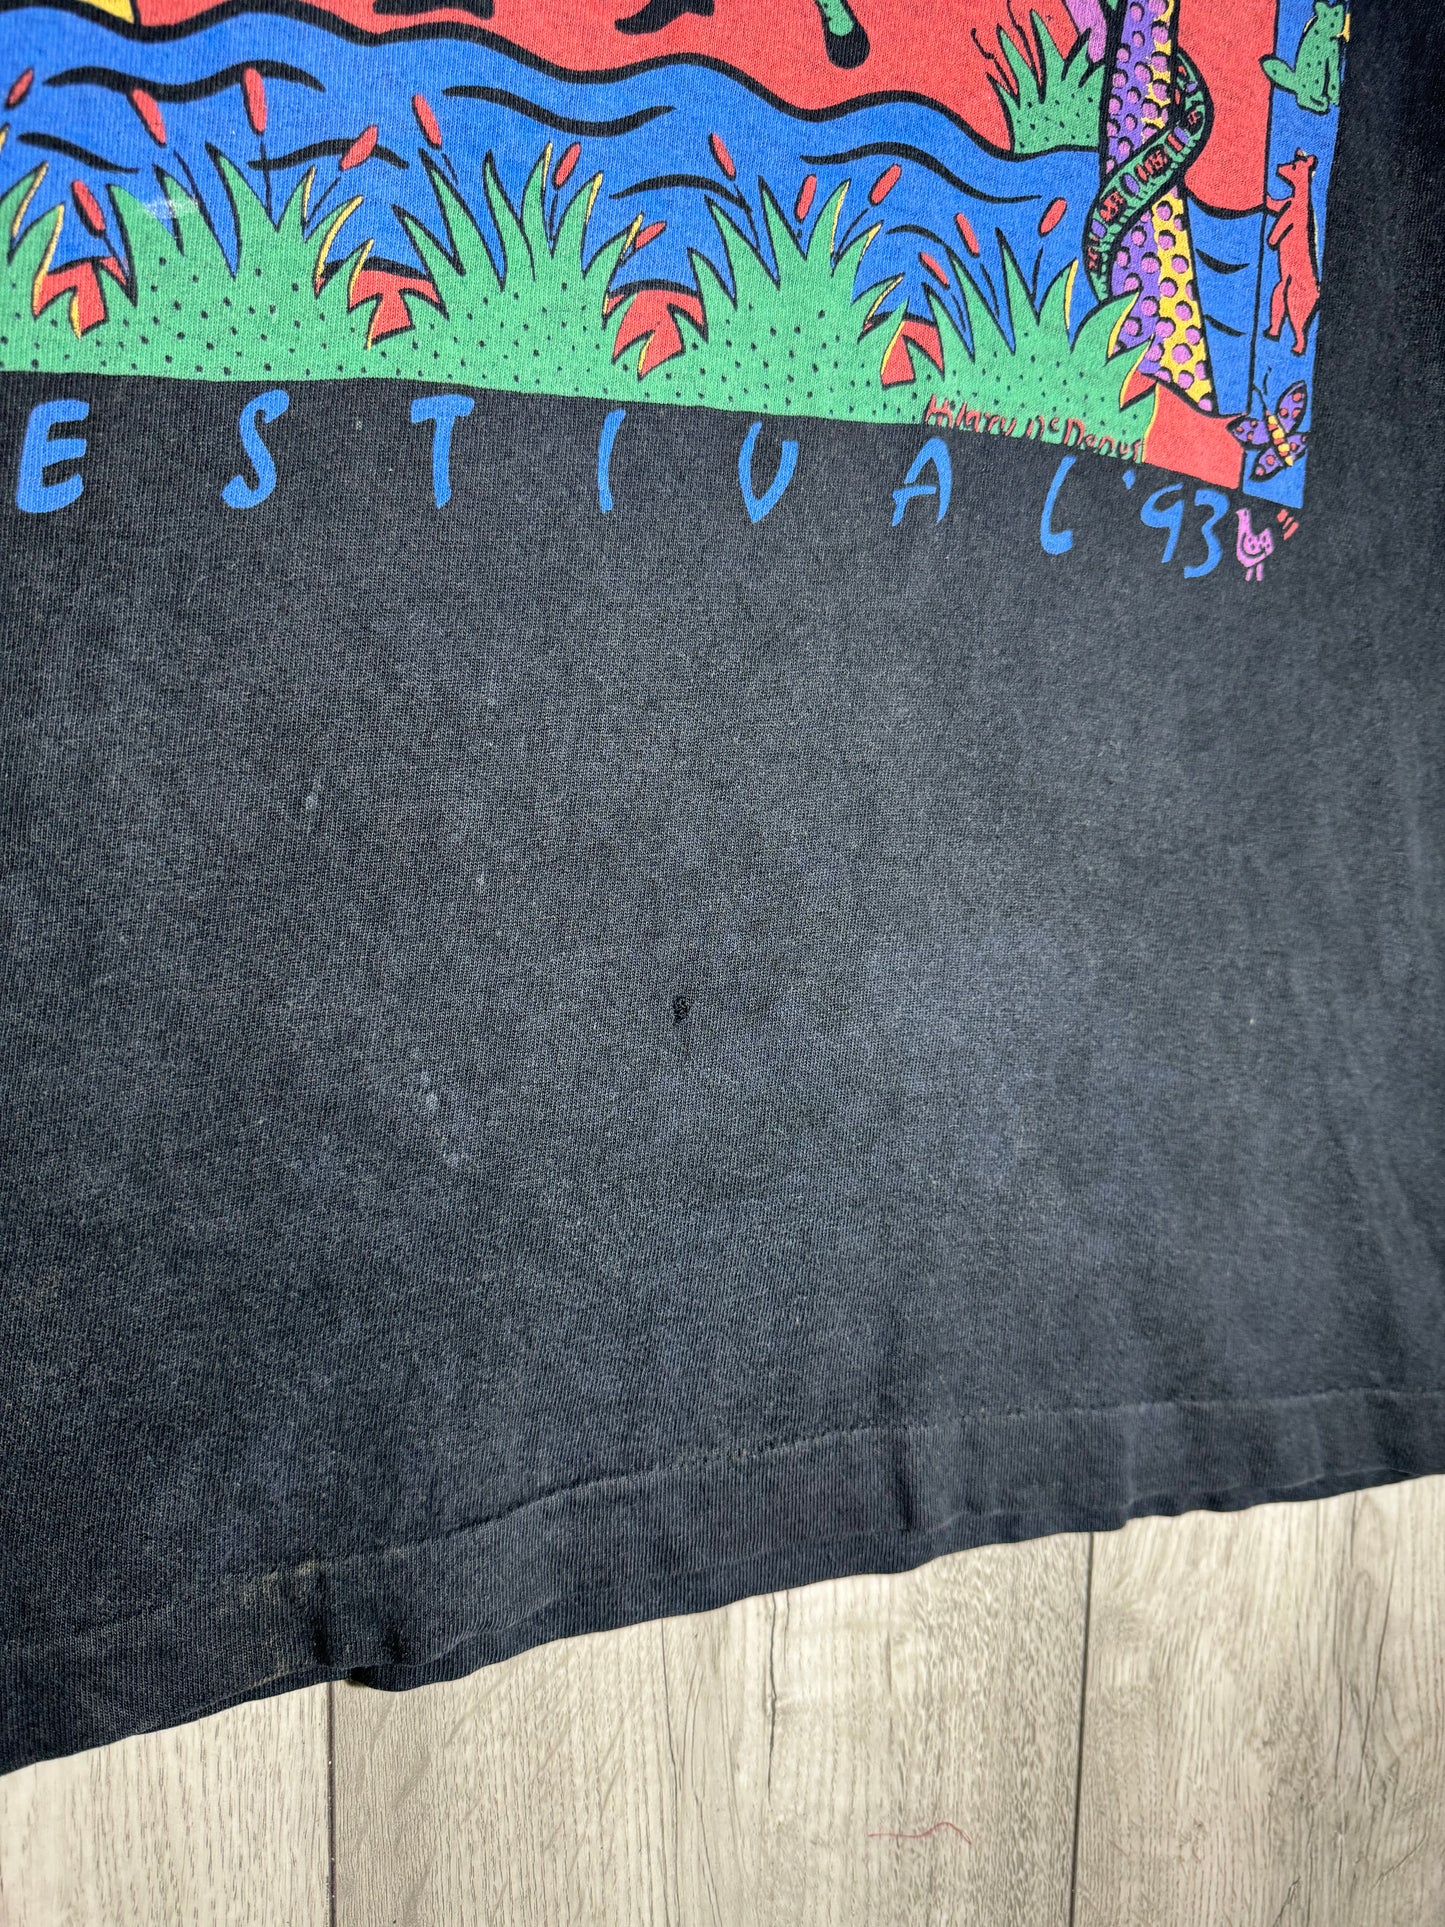 Original 1993 Glastonbury Festival Longsleeve Tshirt